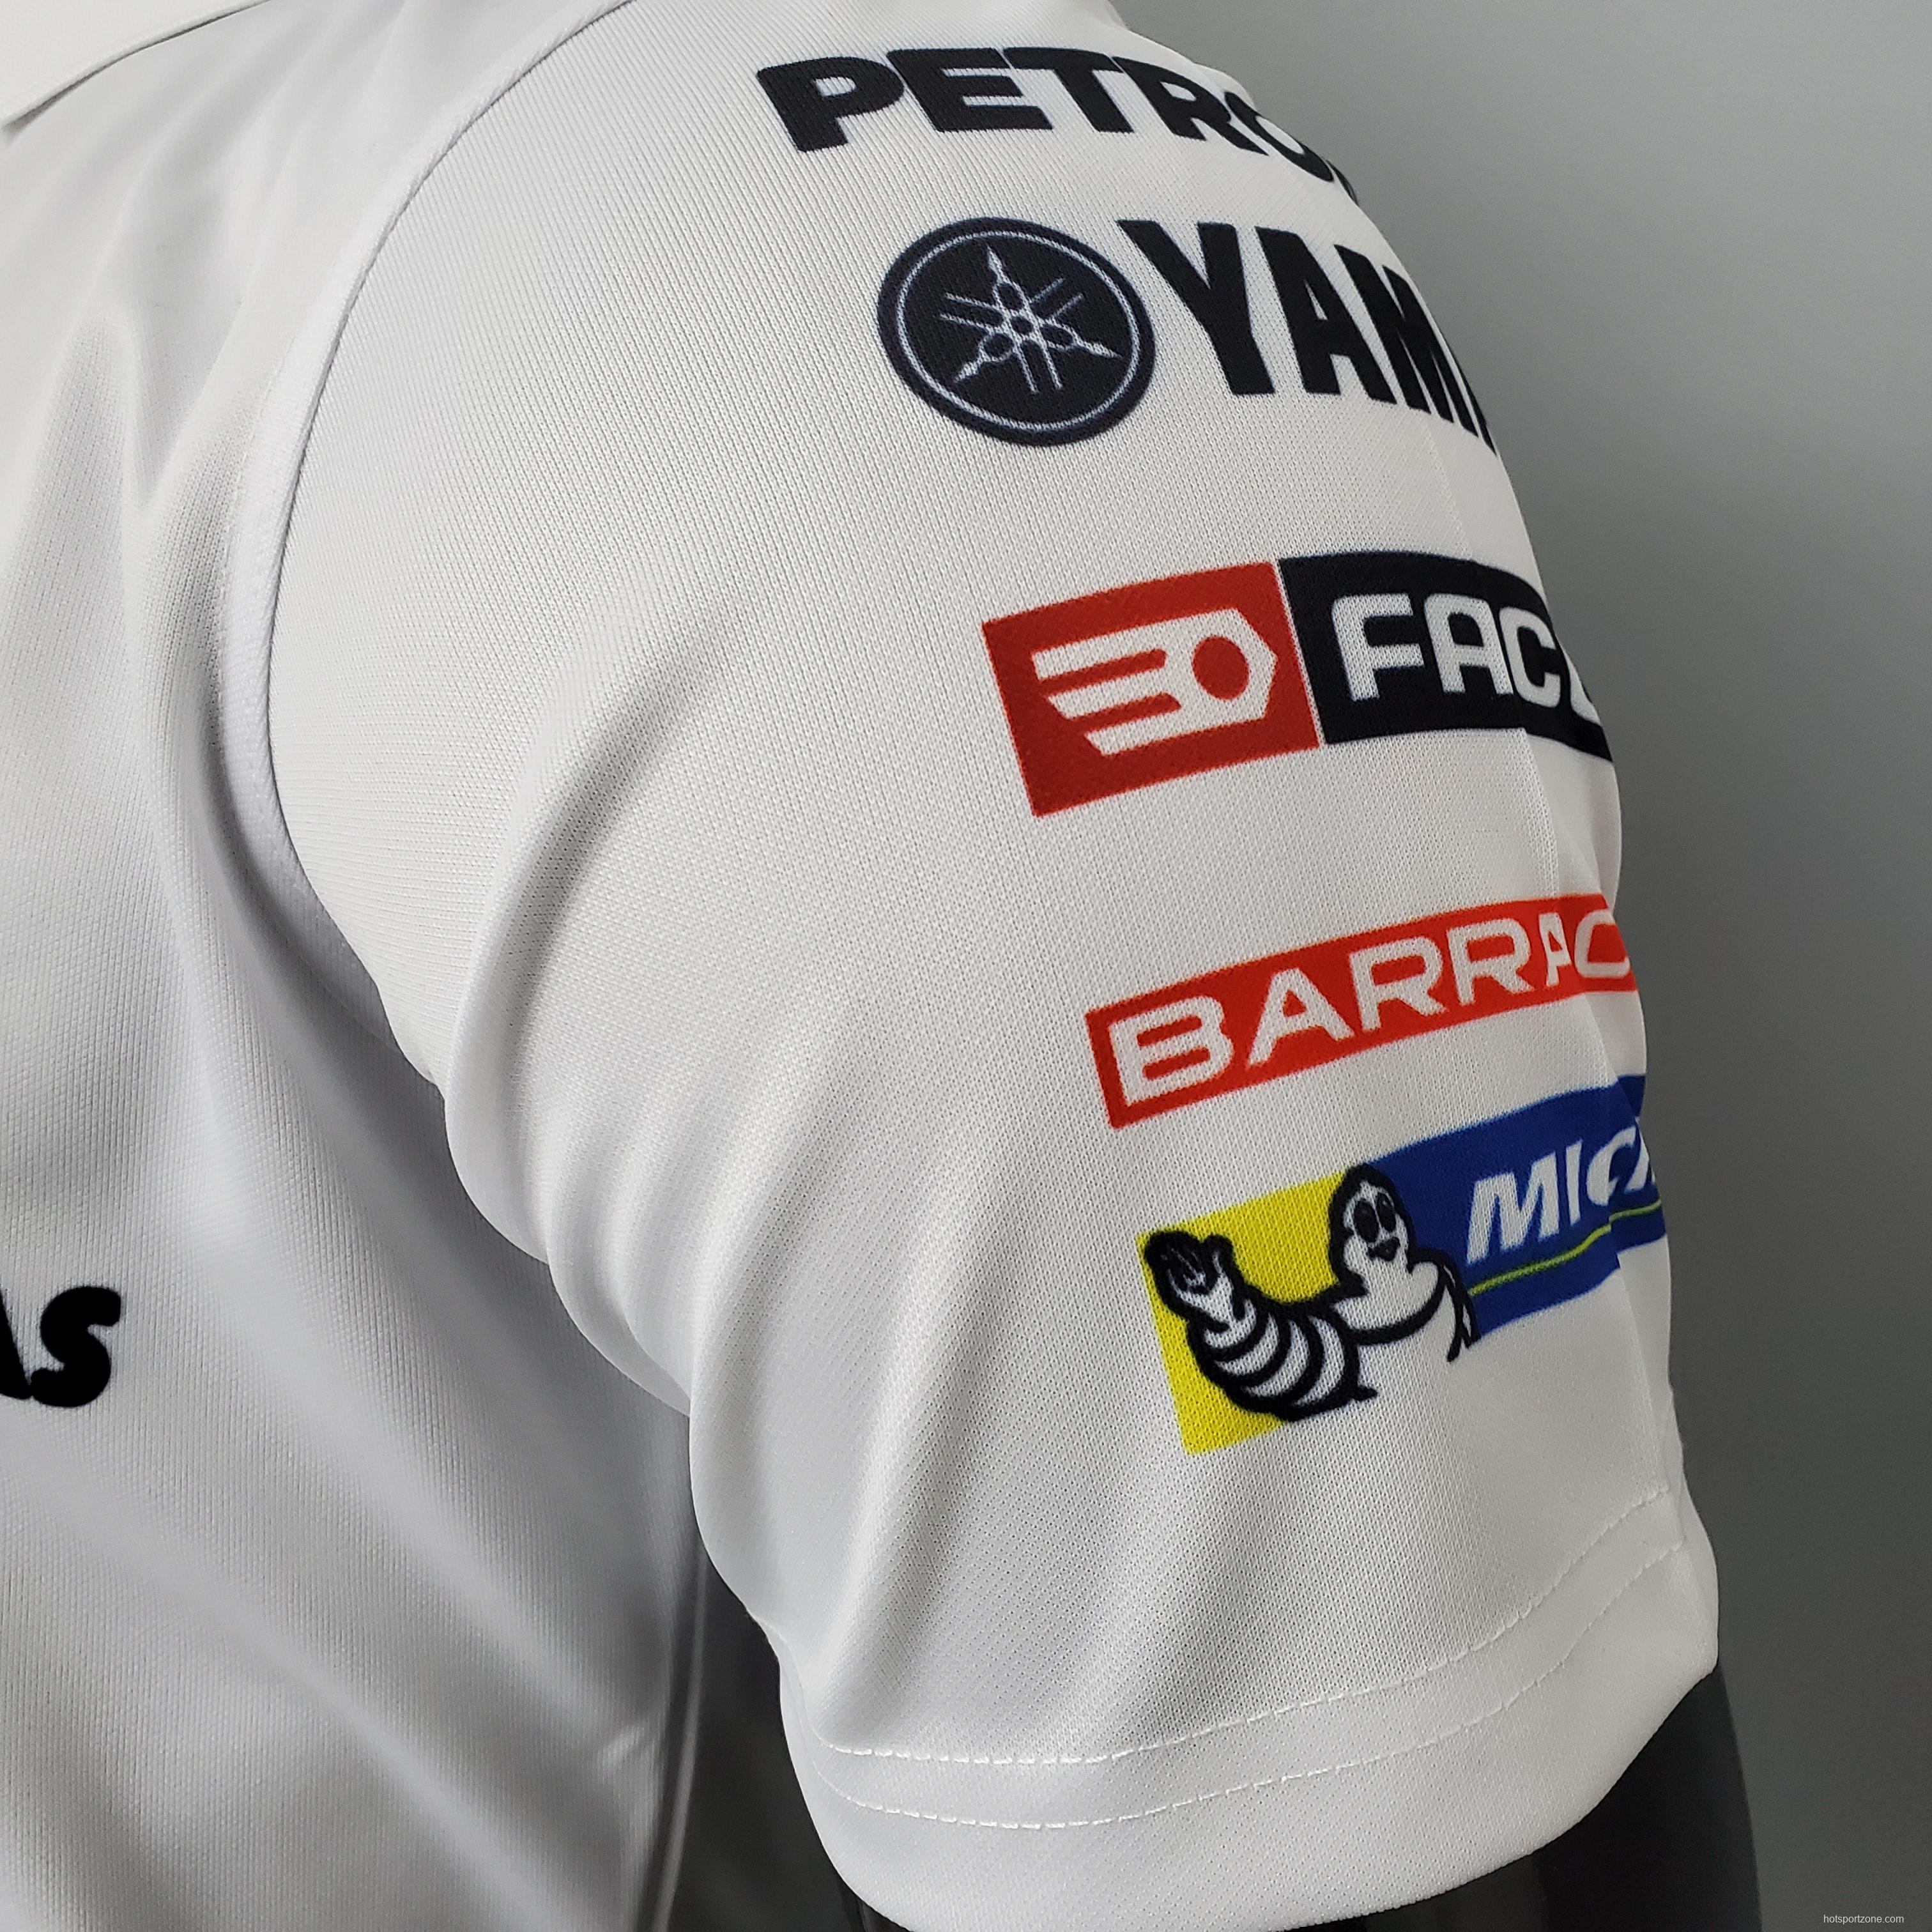 F1 Formula One 2021 Yamaha Racing Suit white S-5XL